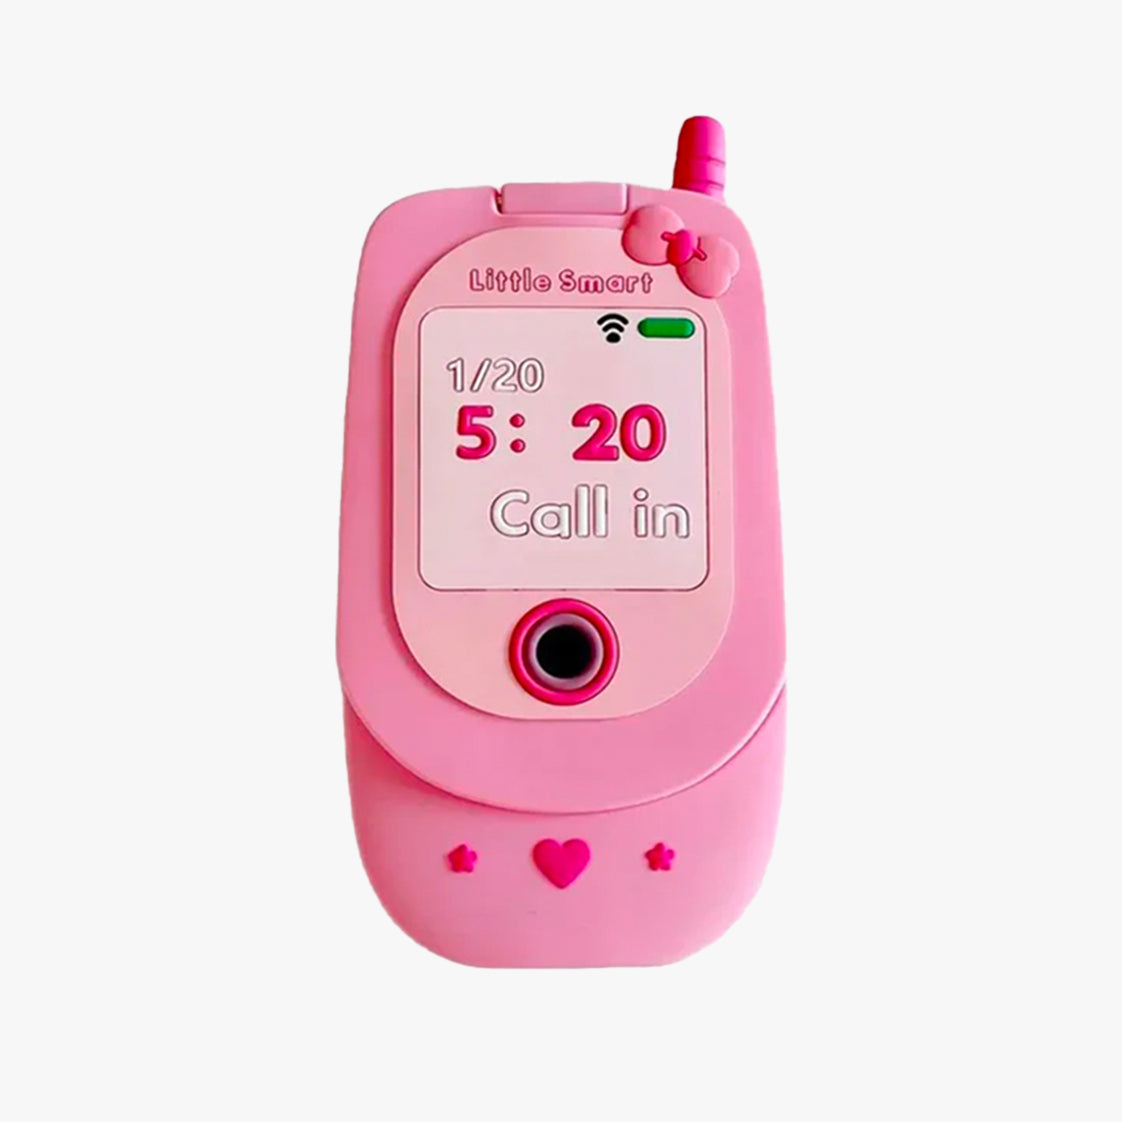 3D Pink Cellphone iPhone Case